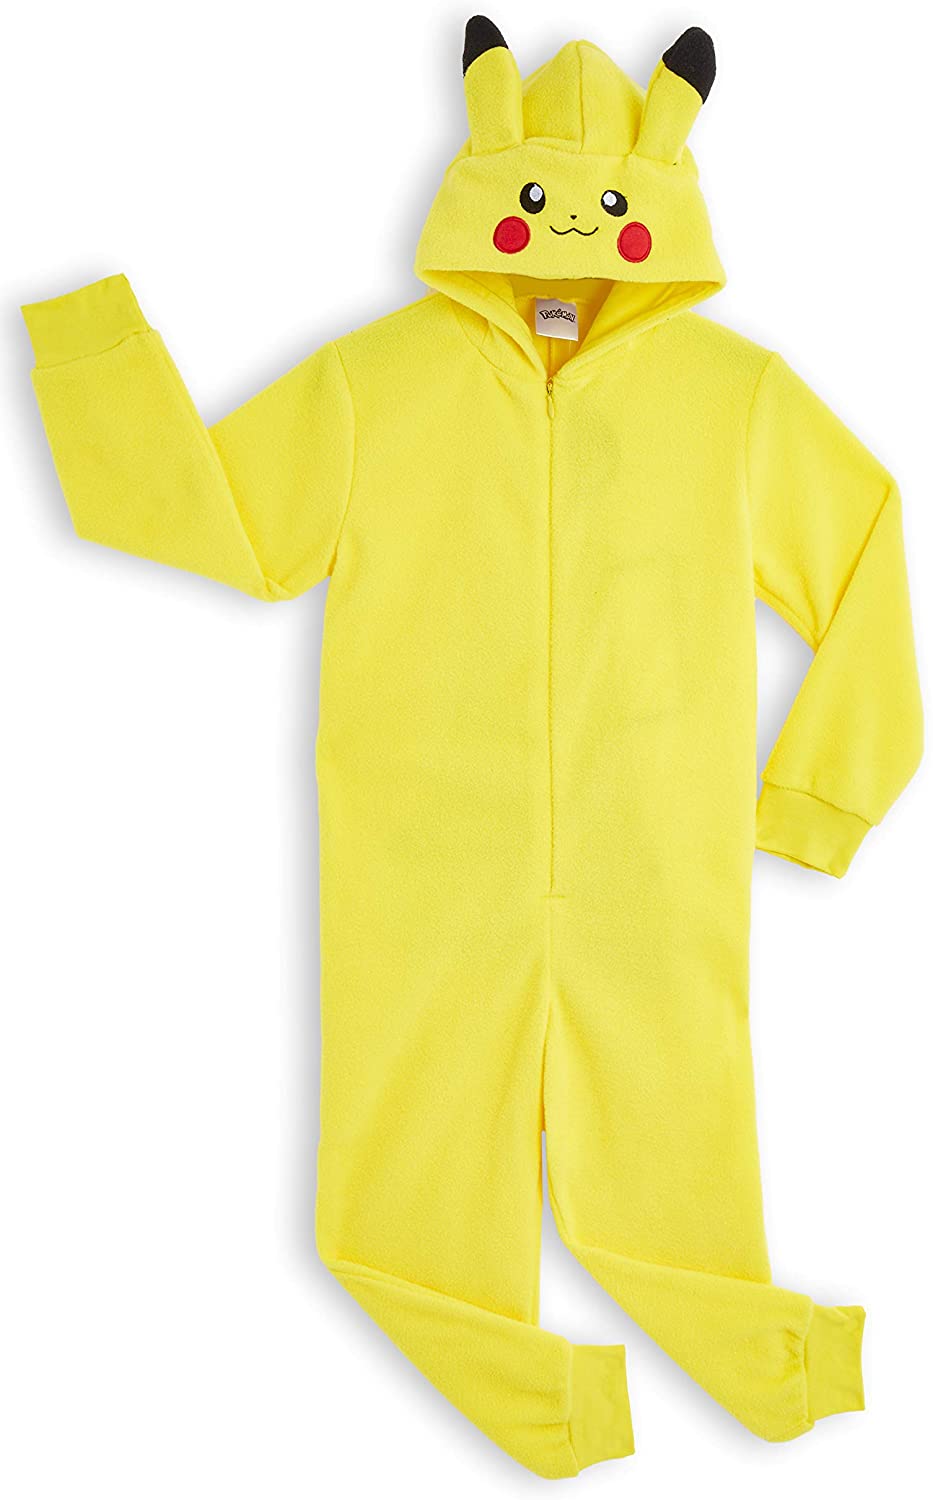 Zij zijn Gelukkig hardware Pokemon Pikachu All in one pyjamas, Cosplay Hoodie,Soft Sleepwear for Boys  Girls | eBay